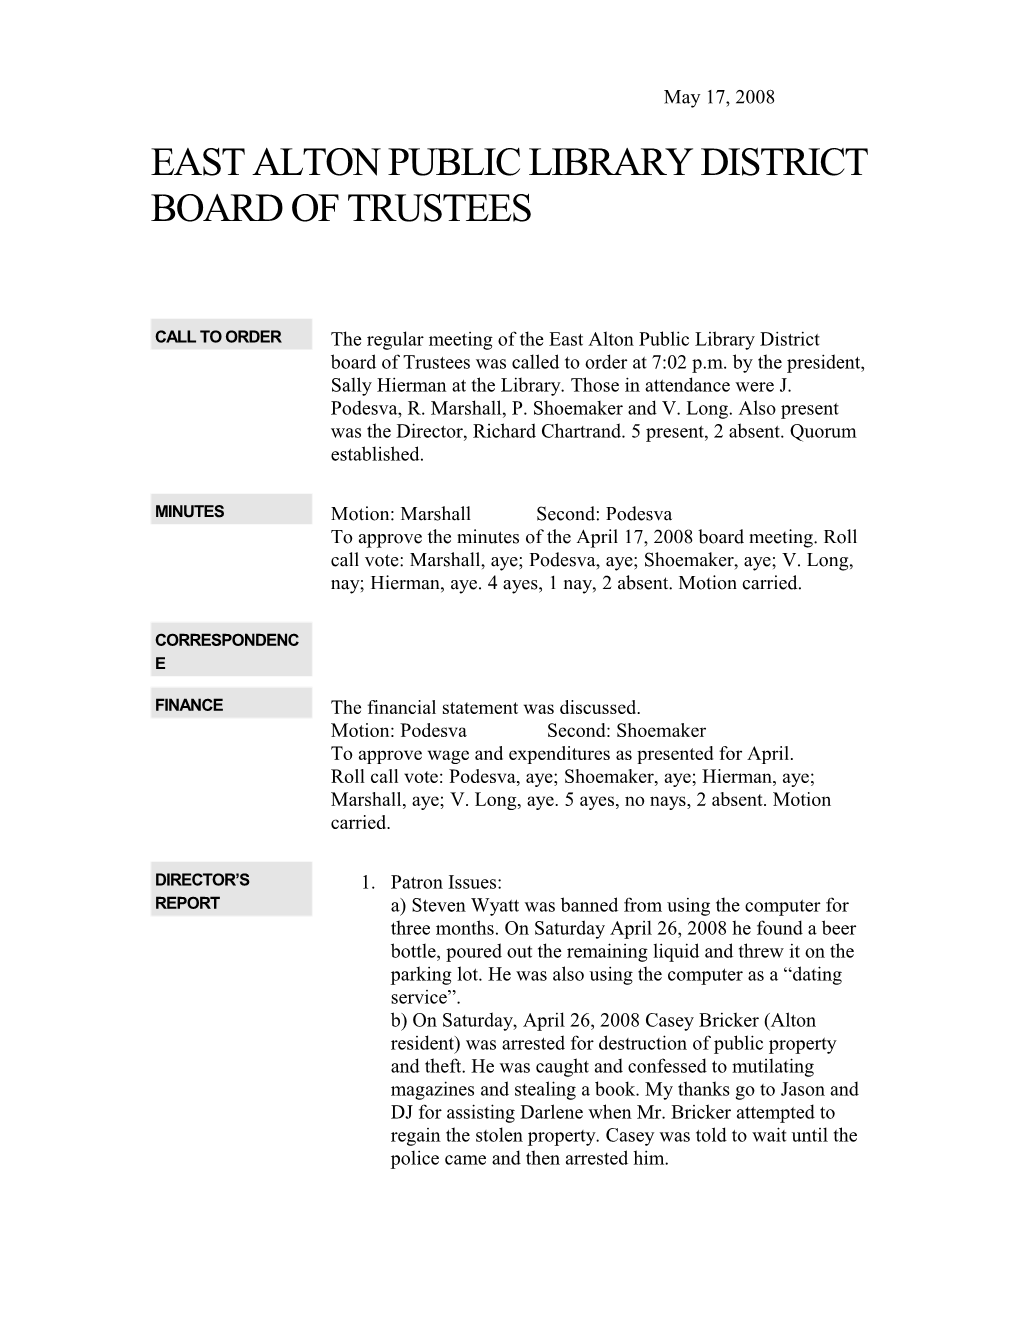 East Alton Public Library District Board of Trustees